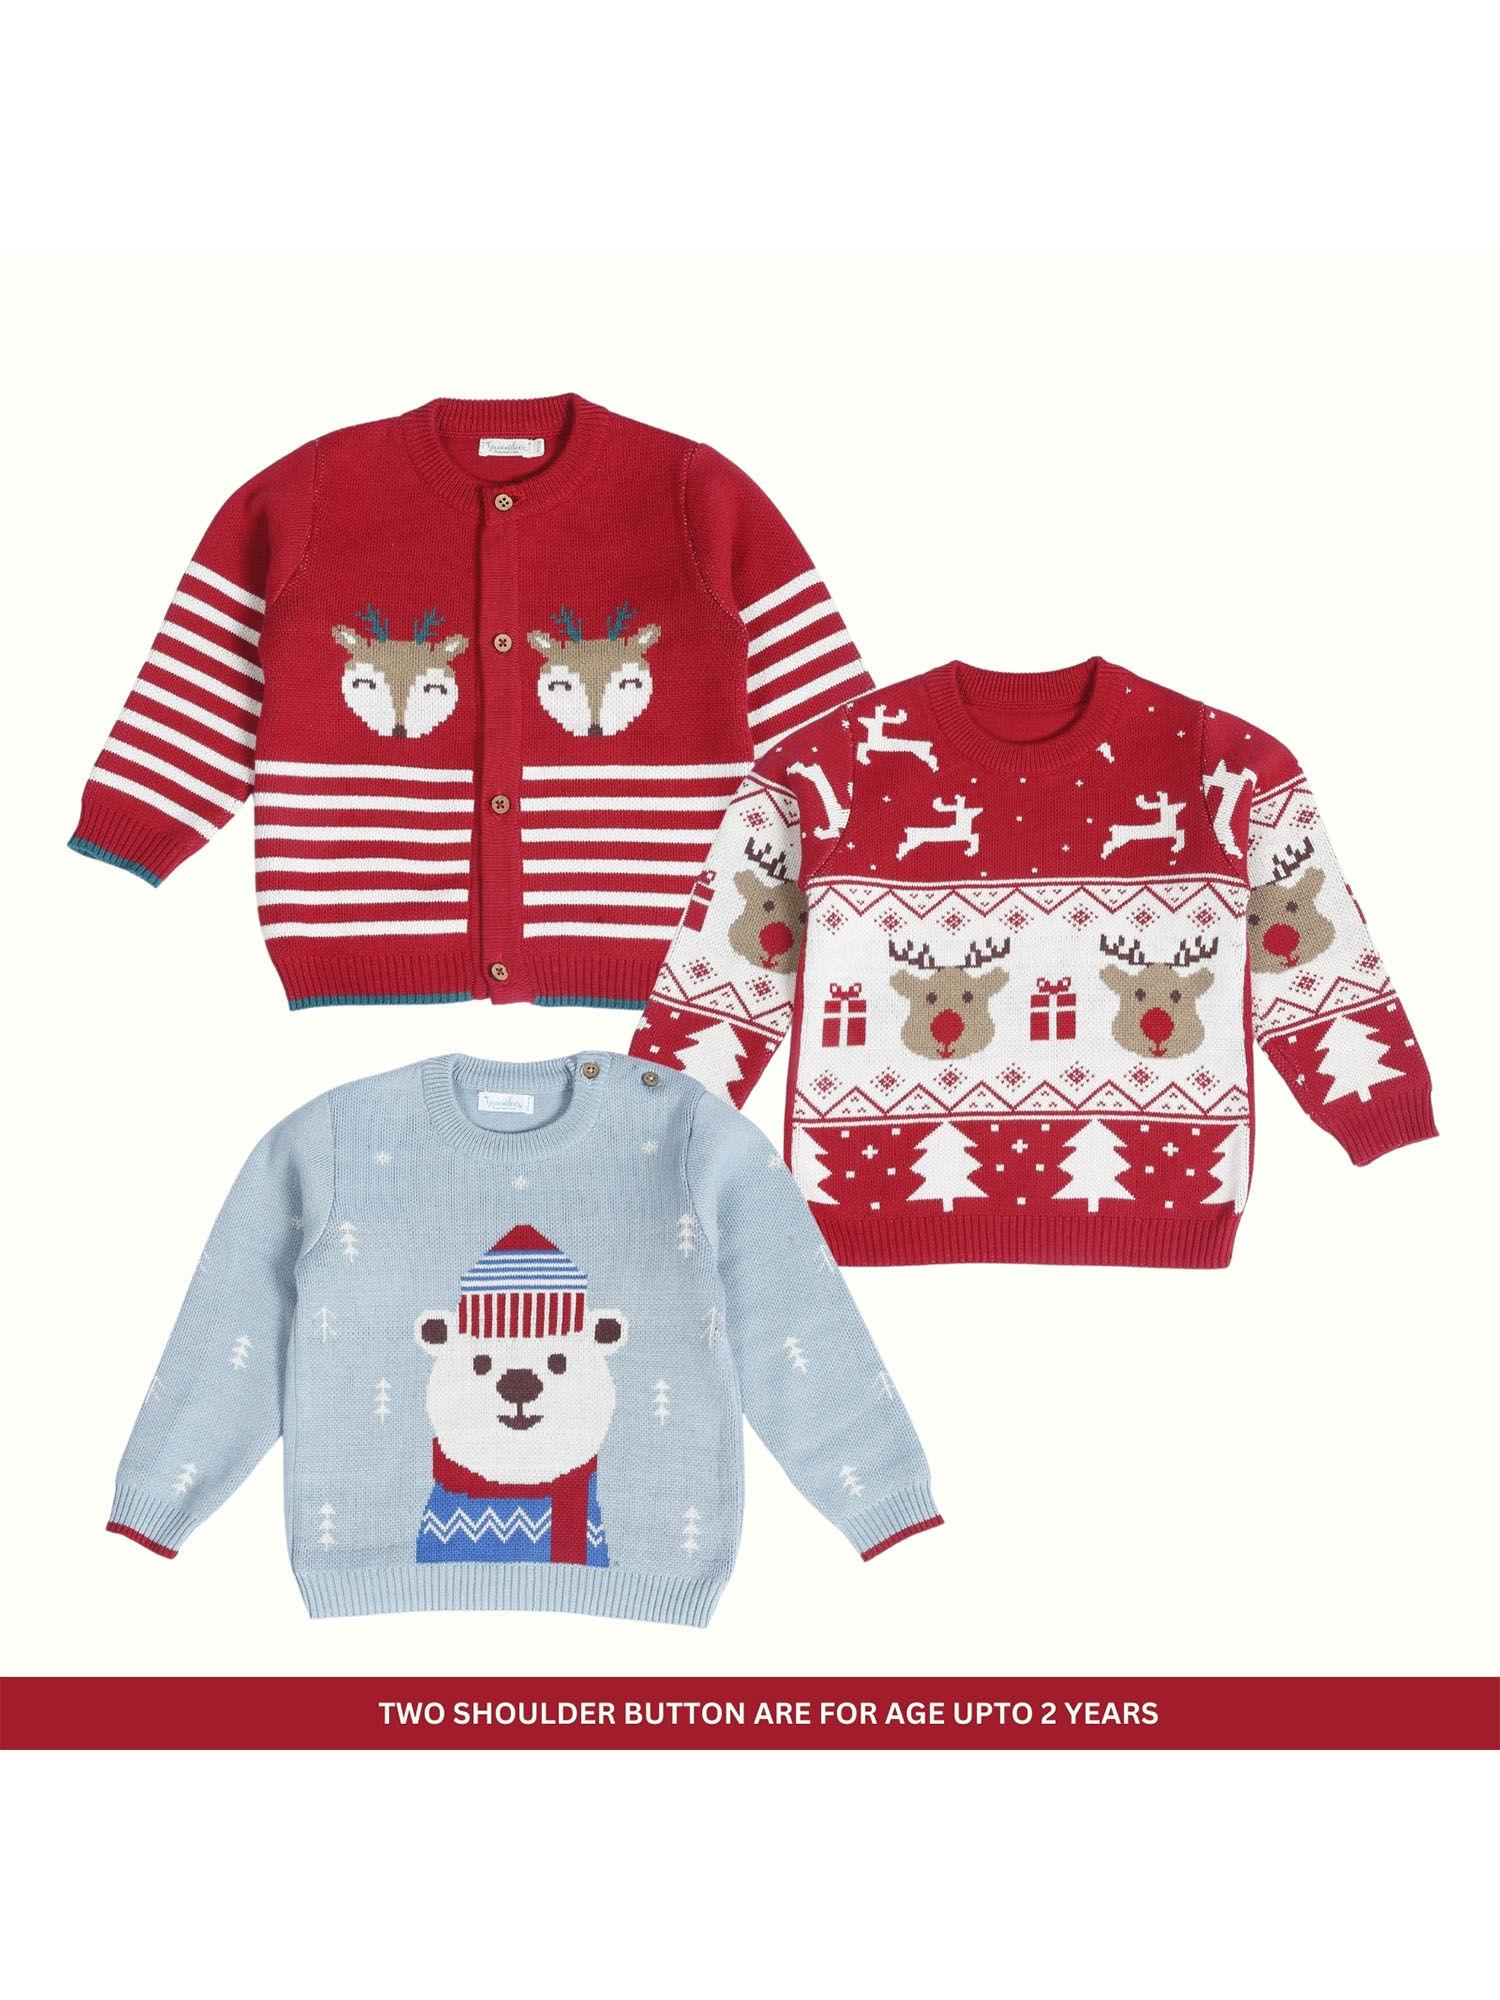 jaunty reindeer joyful reindeer hearth warming bear 3 sweaters (set of 2)